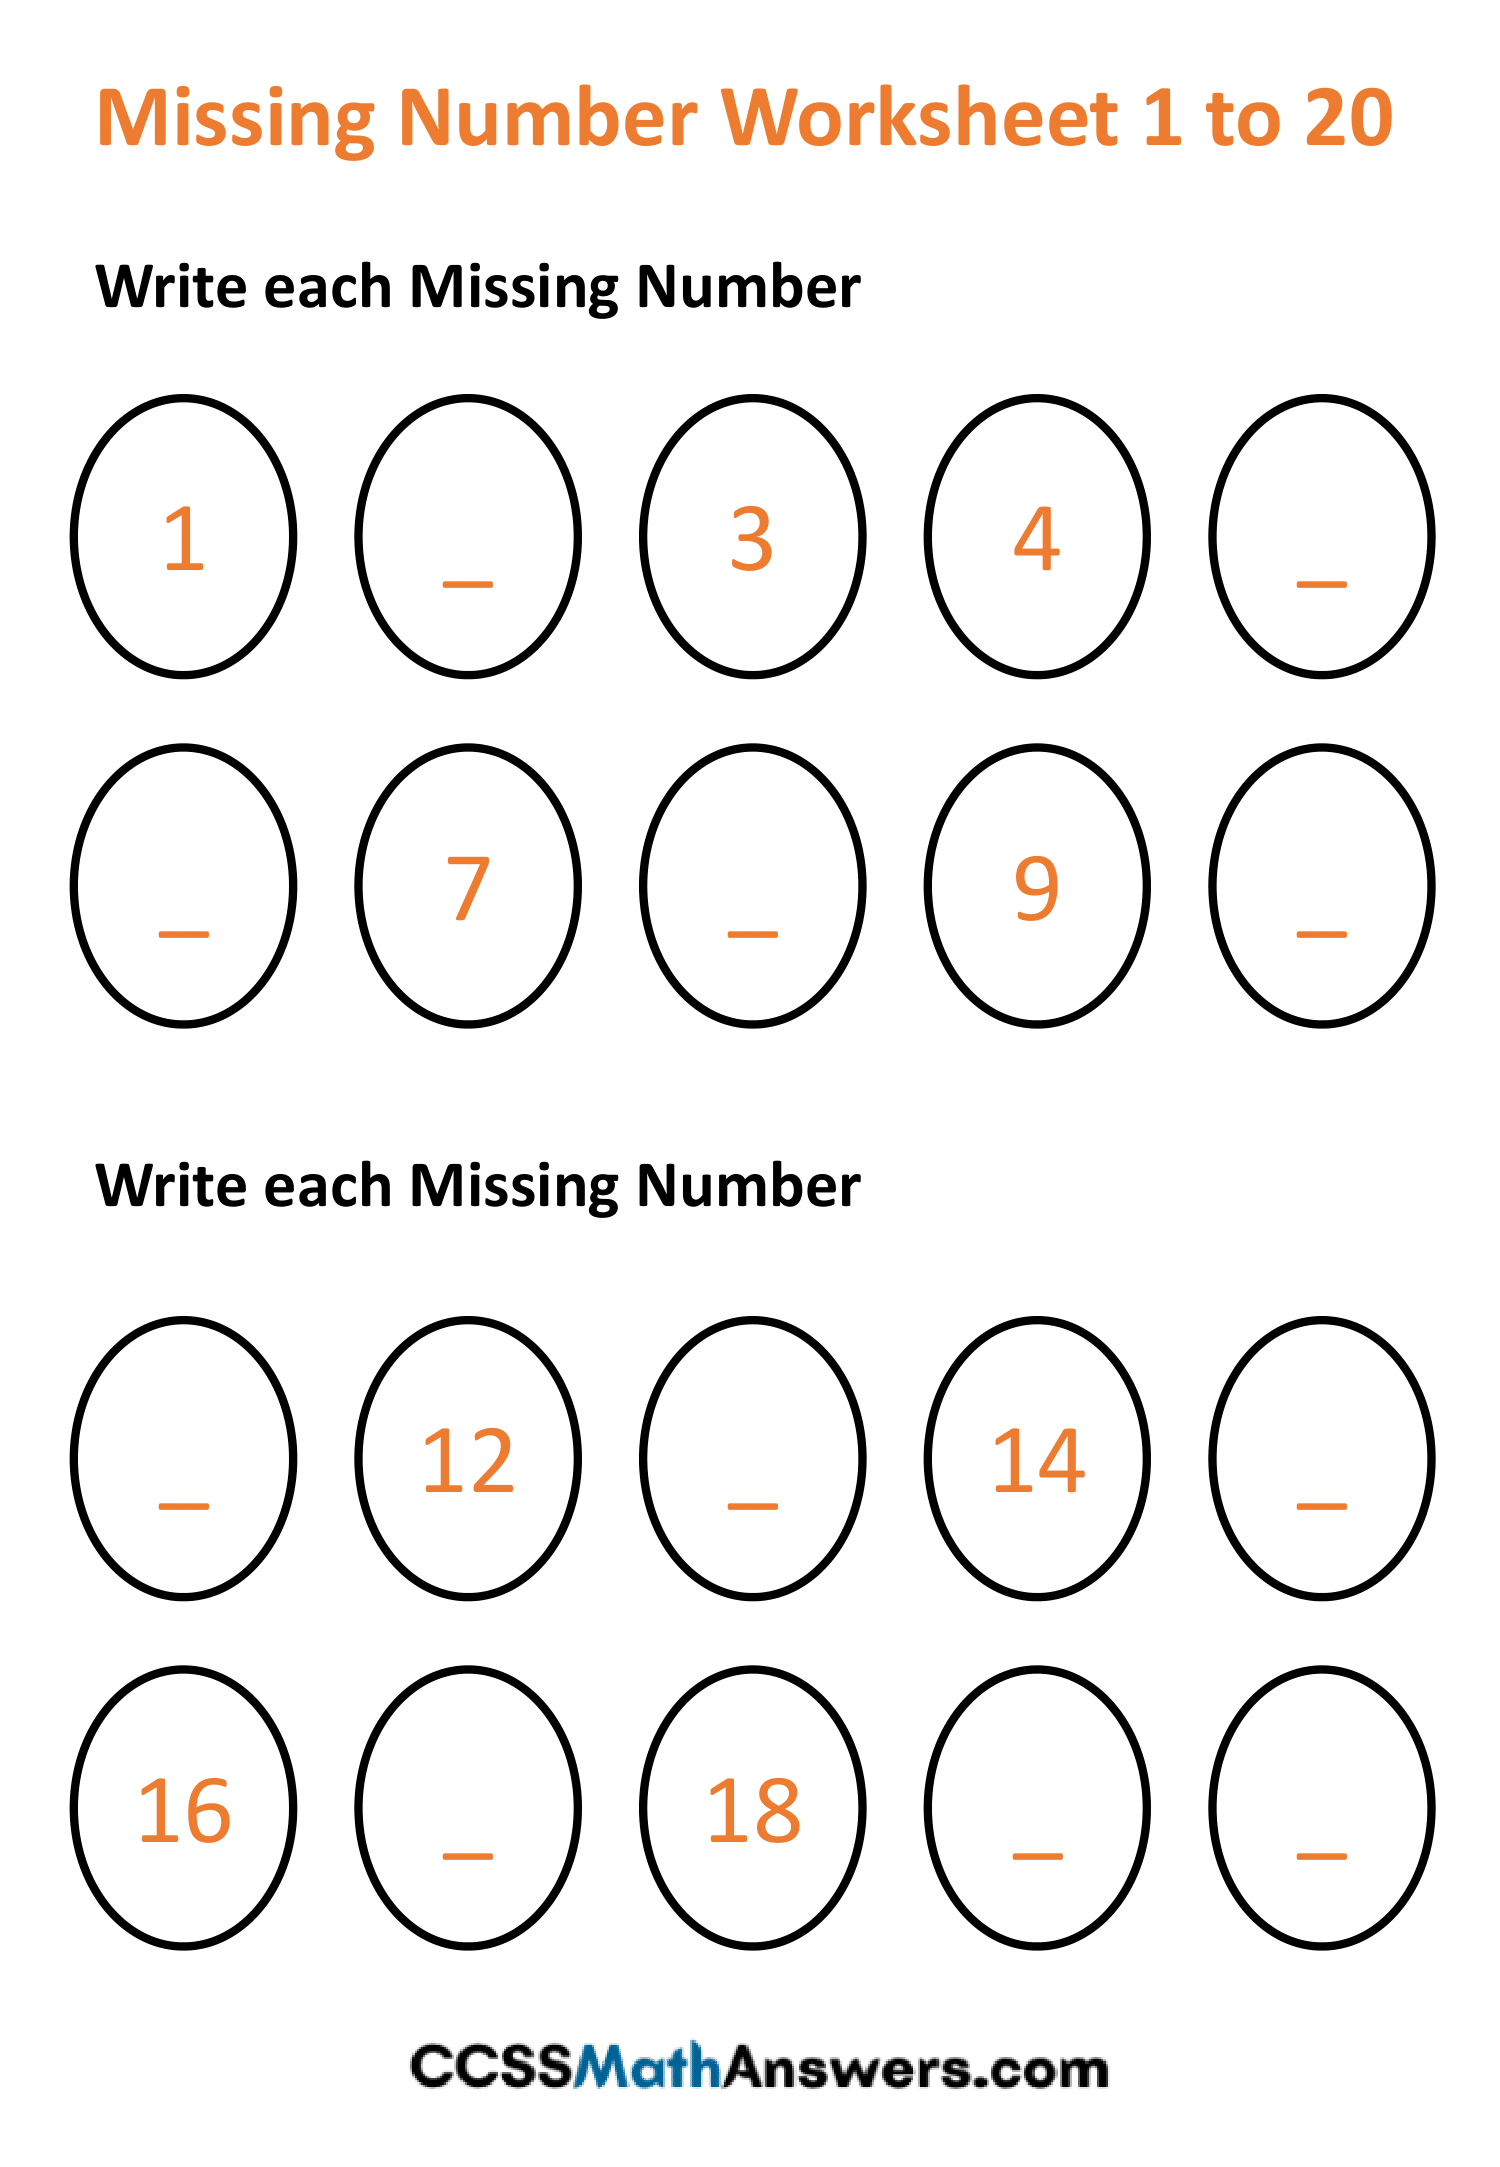 Missing Number Worksheet 1 to 20